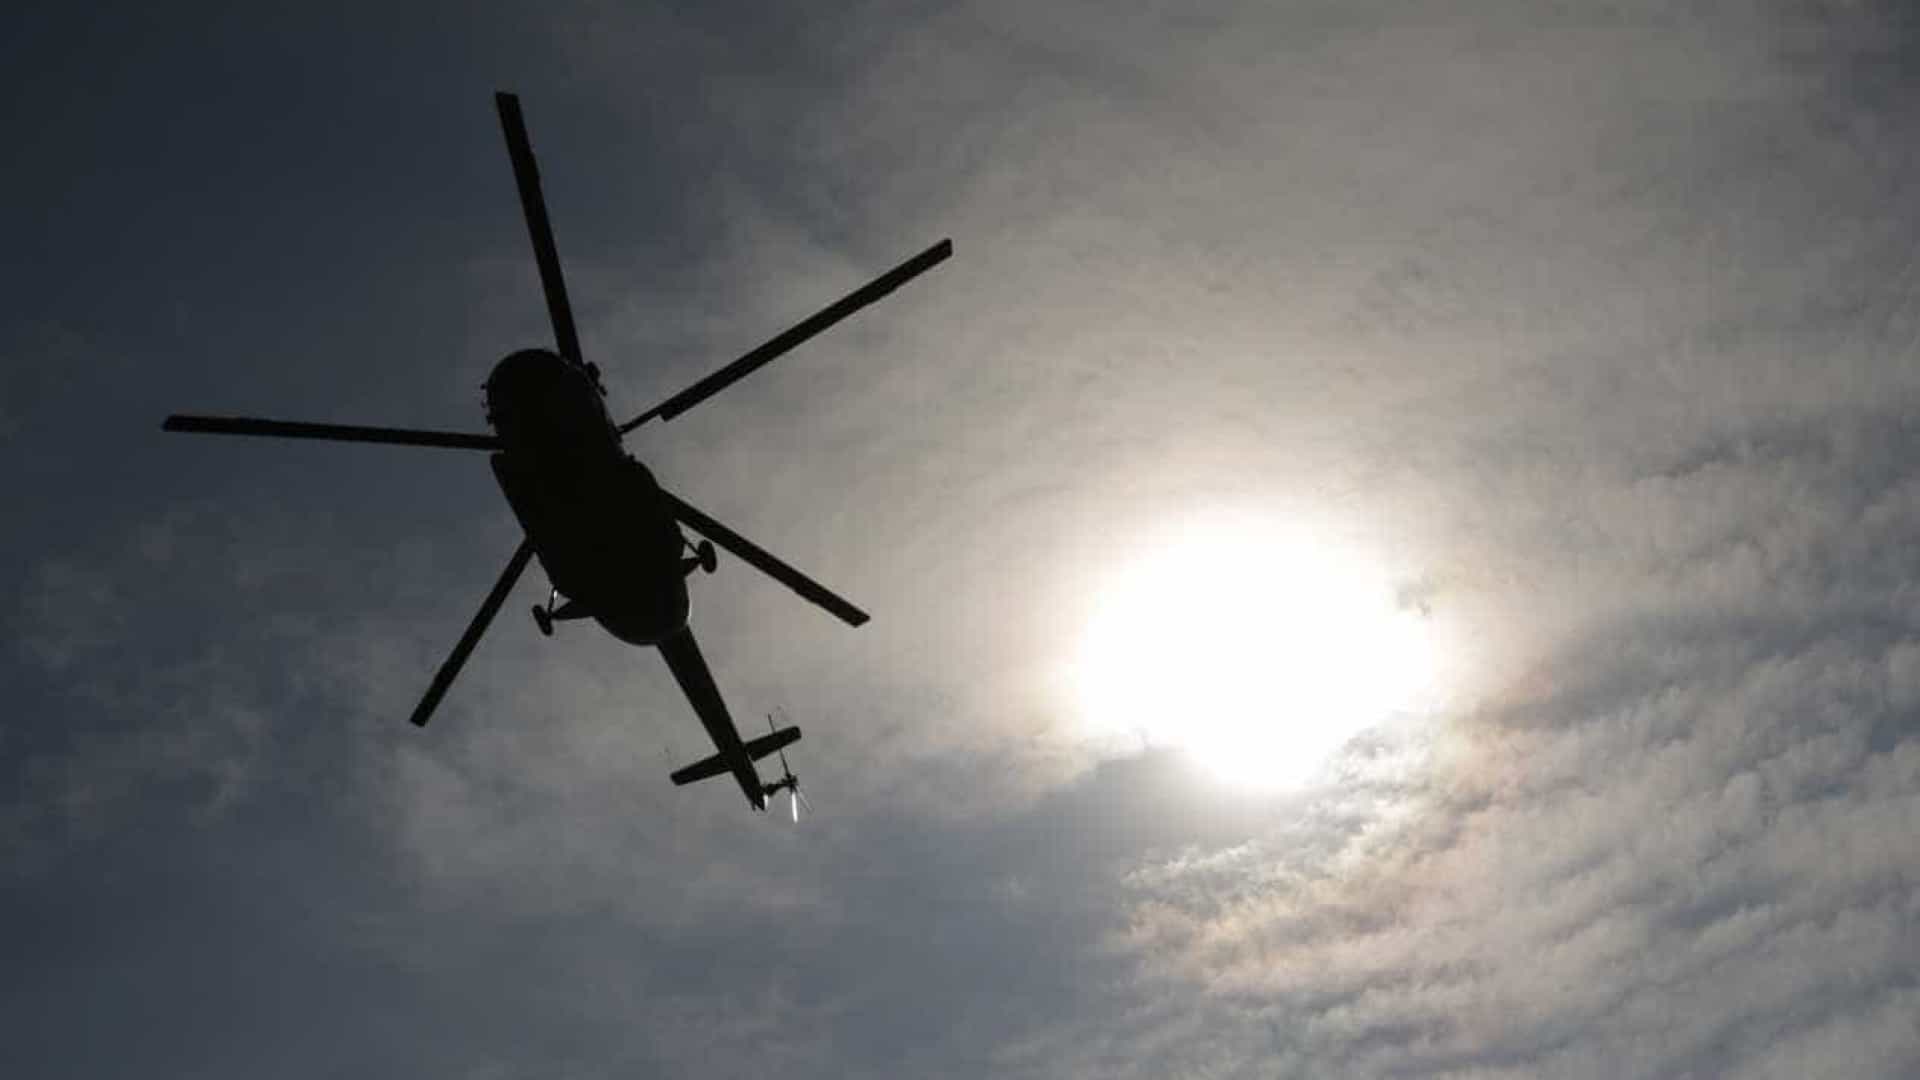 Morre piloto que sobreviveu a queda de helicóptero no Pantanal e foi transferido para o RJ após alta